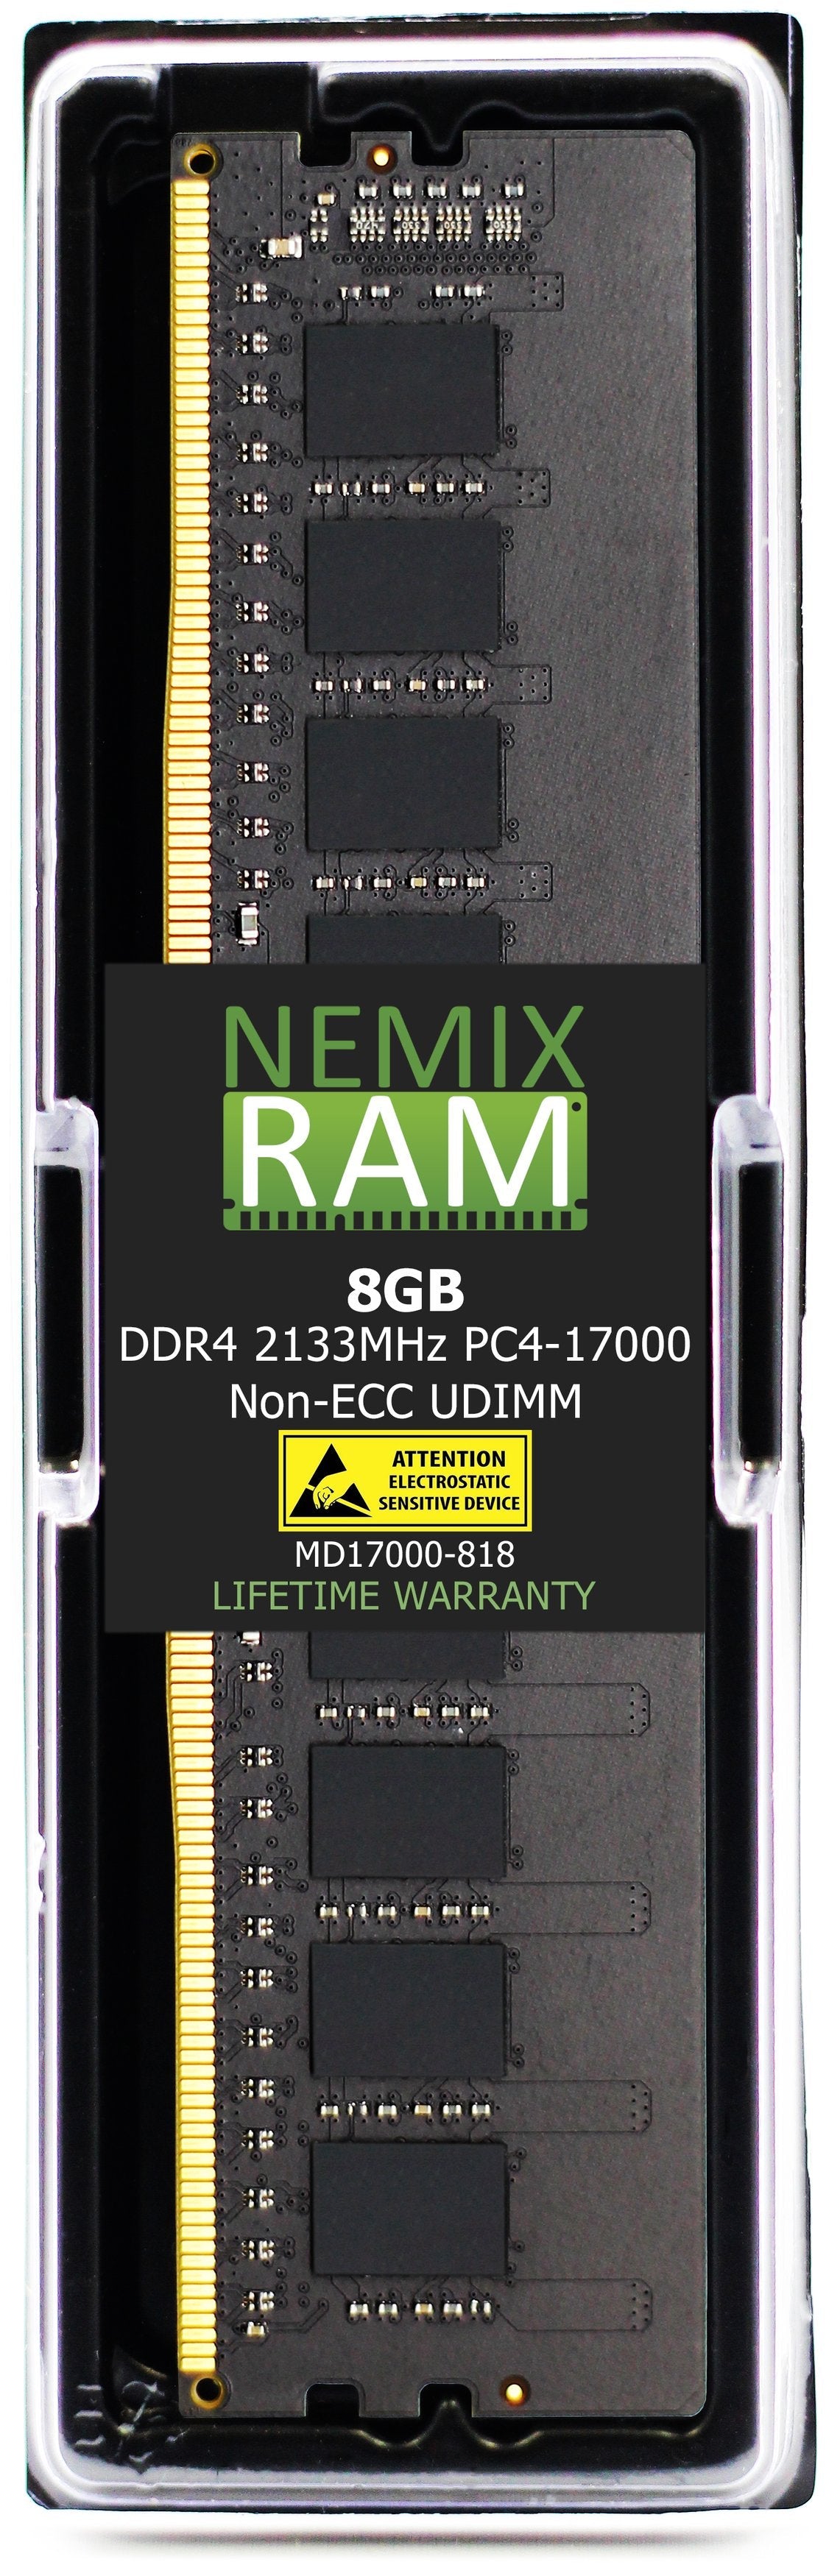 DDR4 2133MHz PC4-17000 UDIMM 1RX8